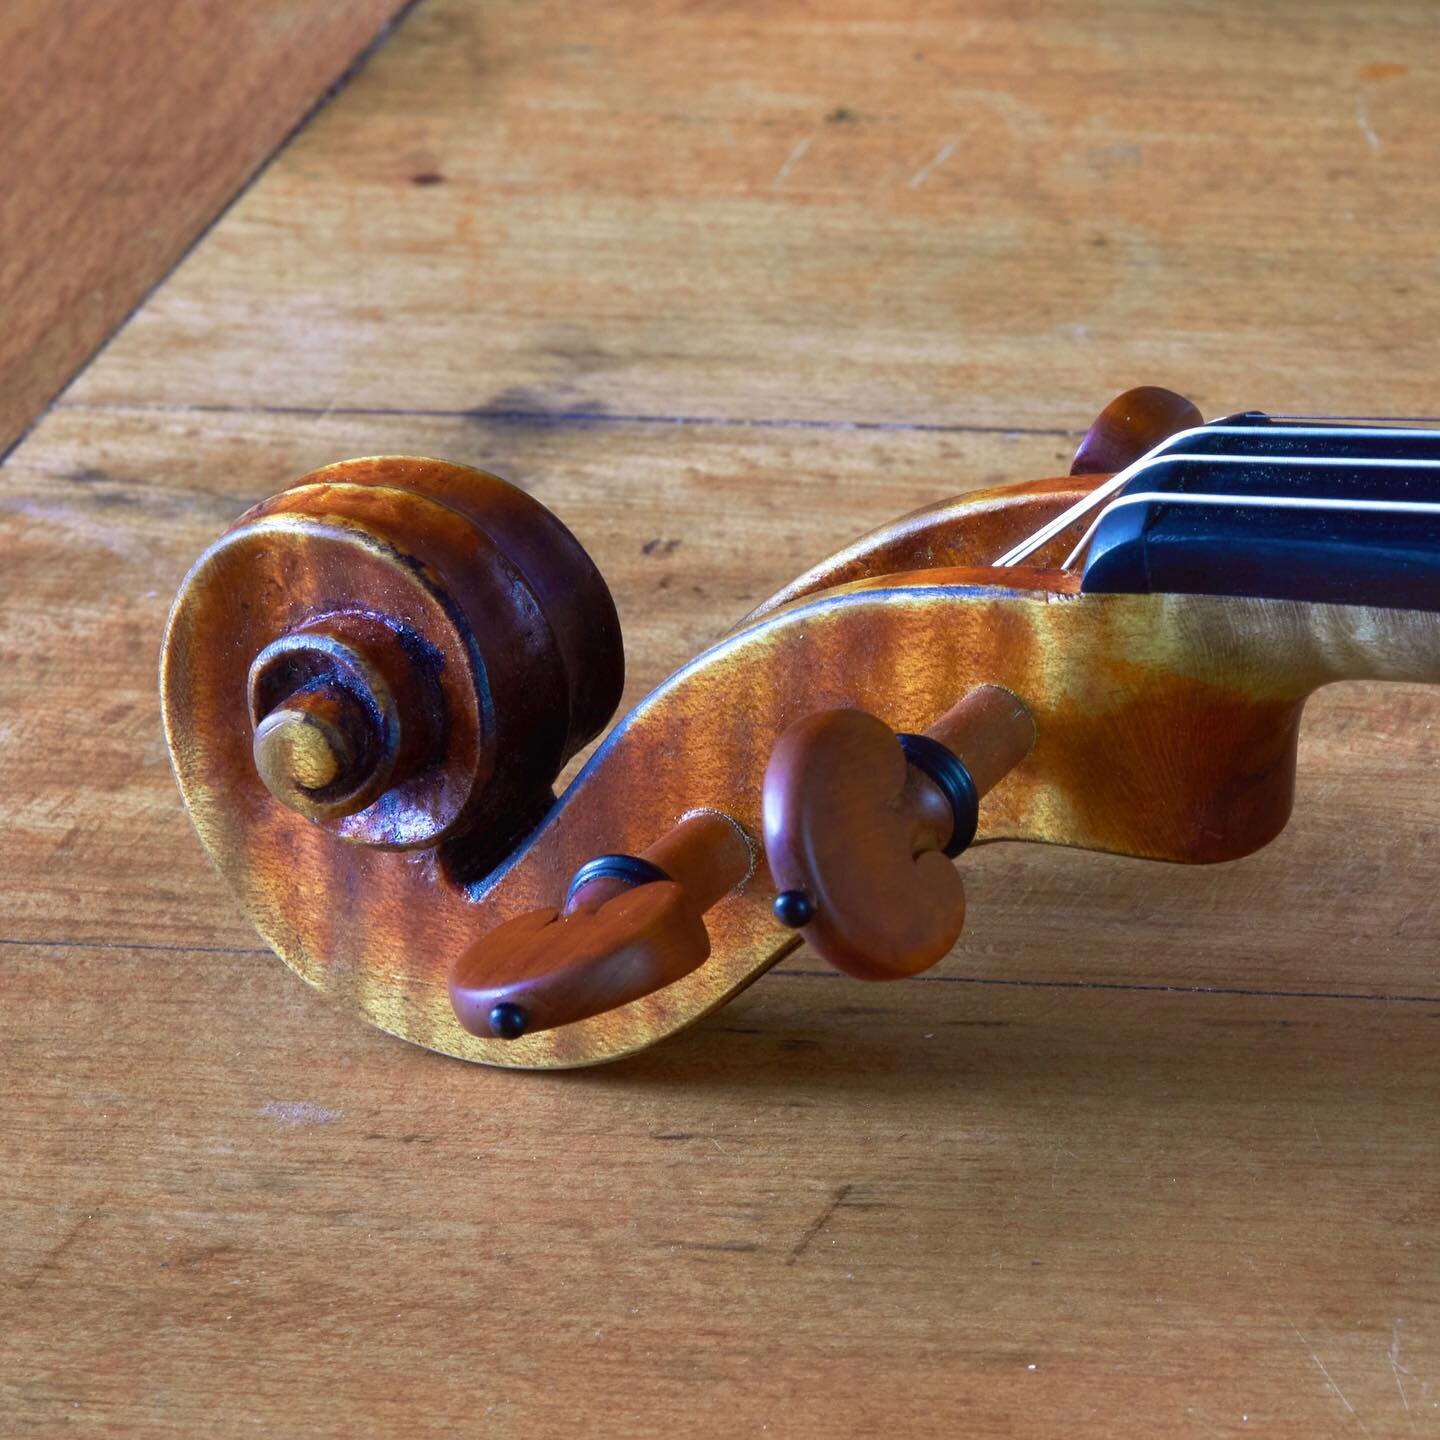 #scroll #mapleflame #Jacobveitmueller 
.
.
.
.
.
.
.
.
#workshop #workbench #Violin  #violinmaker #maple #handmade #workinprogress #orchestra #violine #violino #instrument #stringinstrument #luthier #바이올린 #violinmaker #berlin #バイオリン #Geige #fi